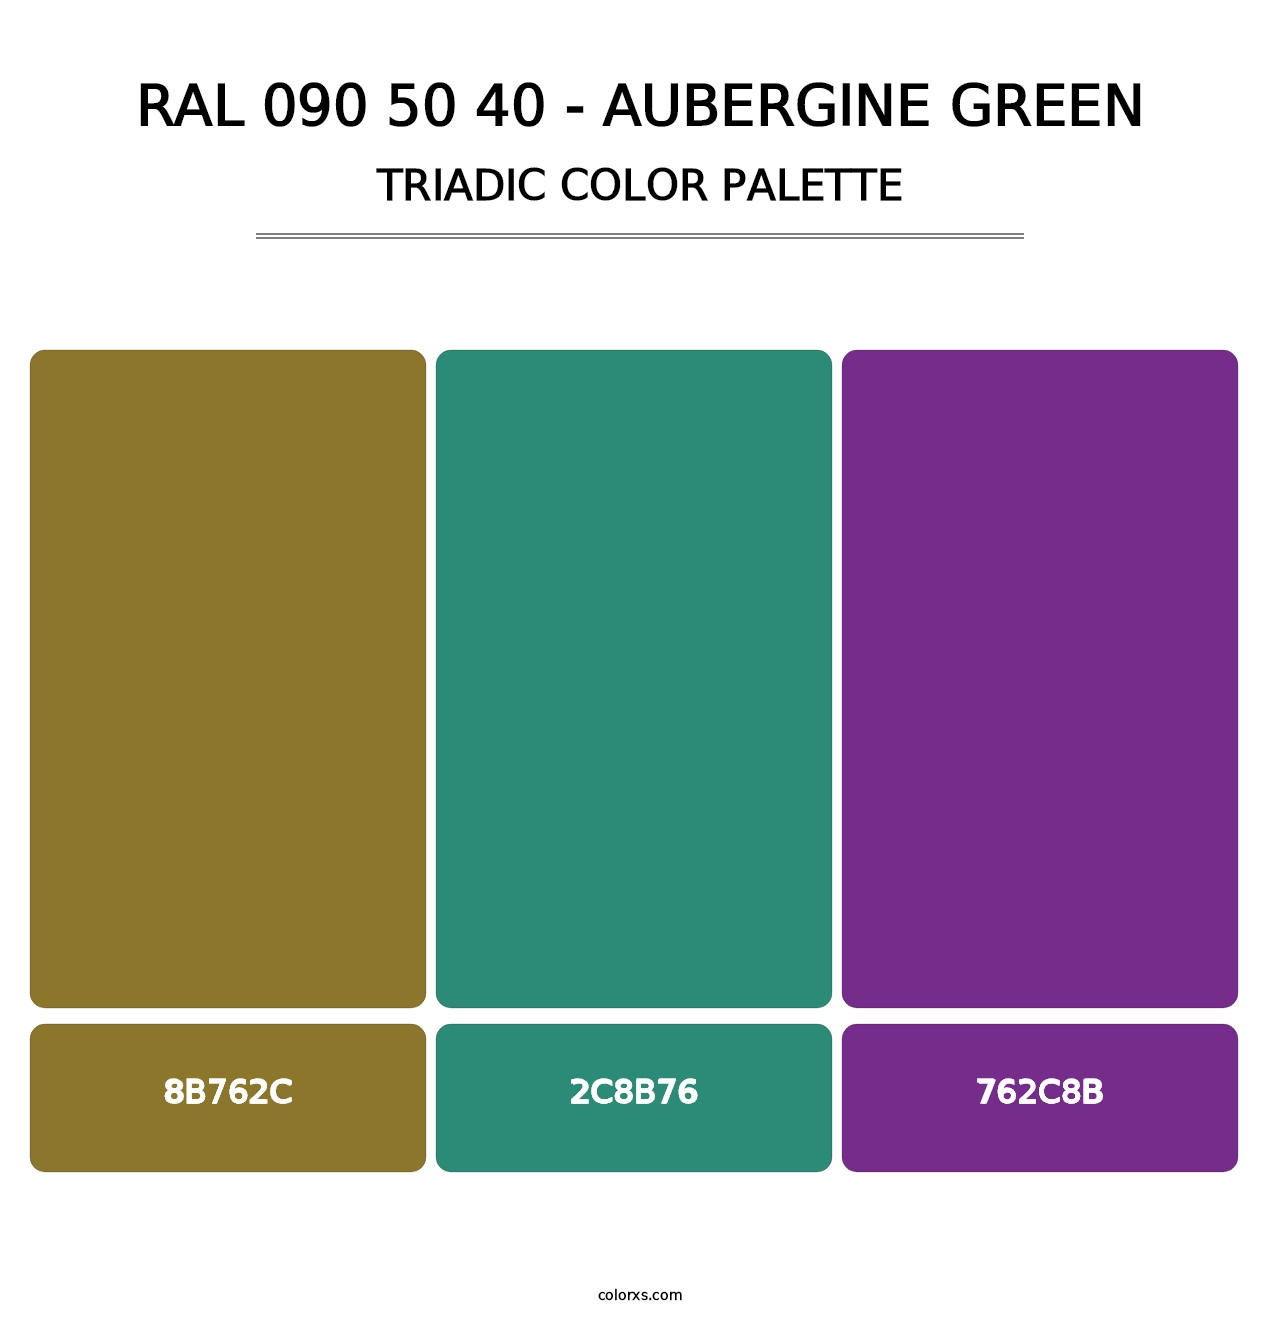 RAL 090 50 40 - Aubergine Green - Triadic Color Palette